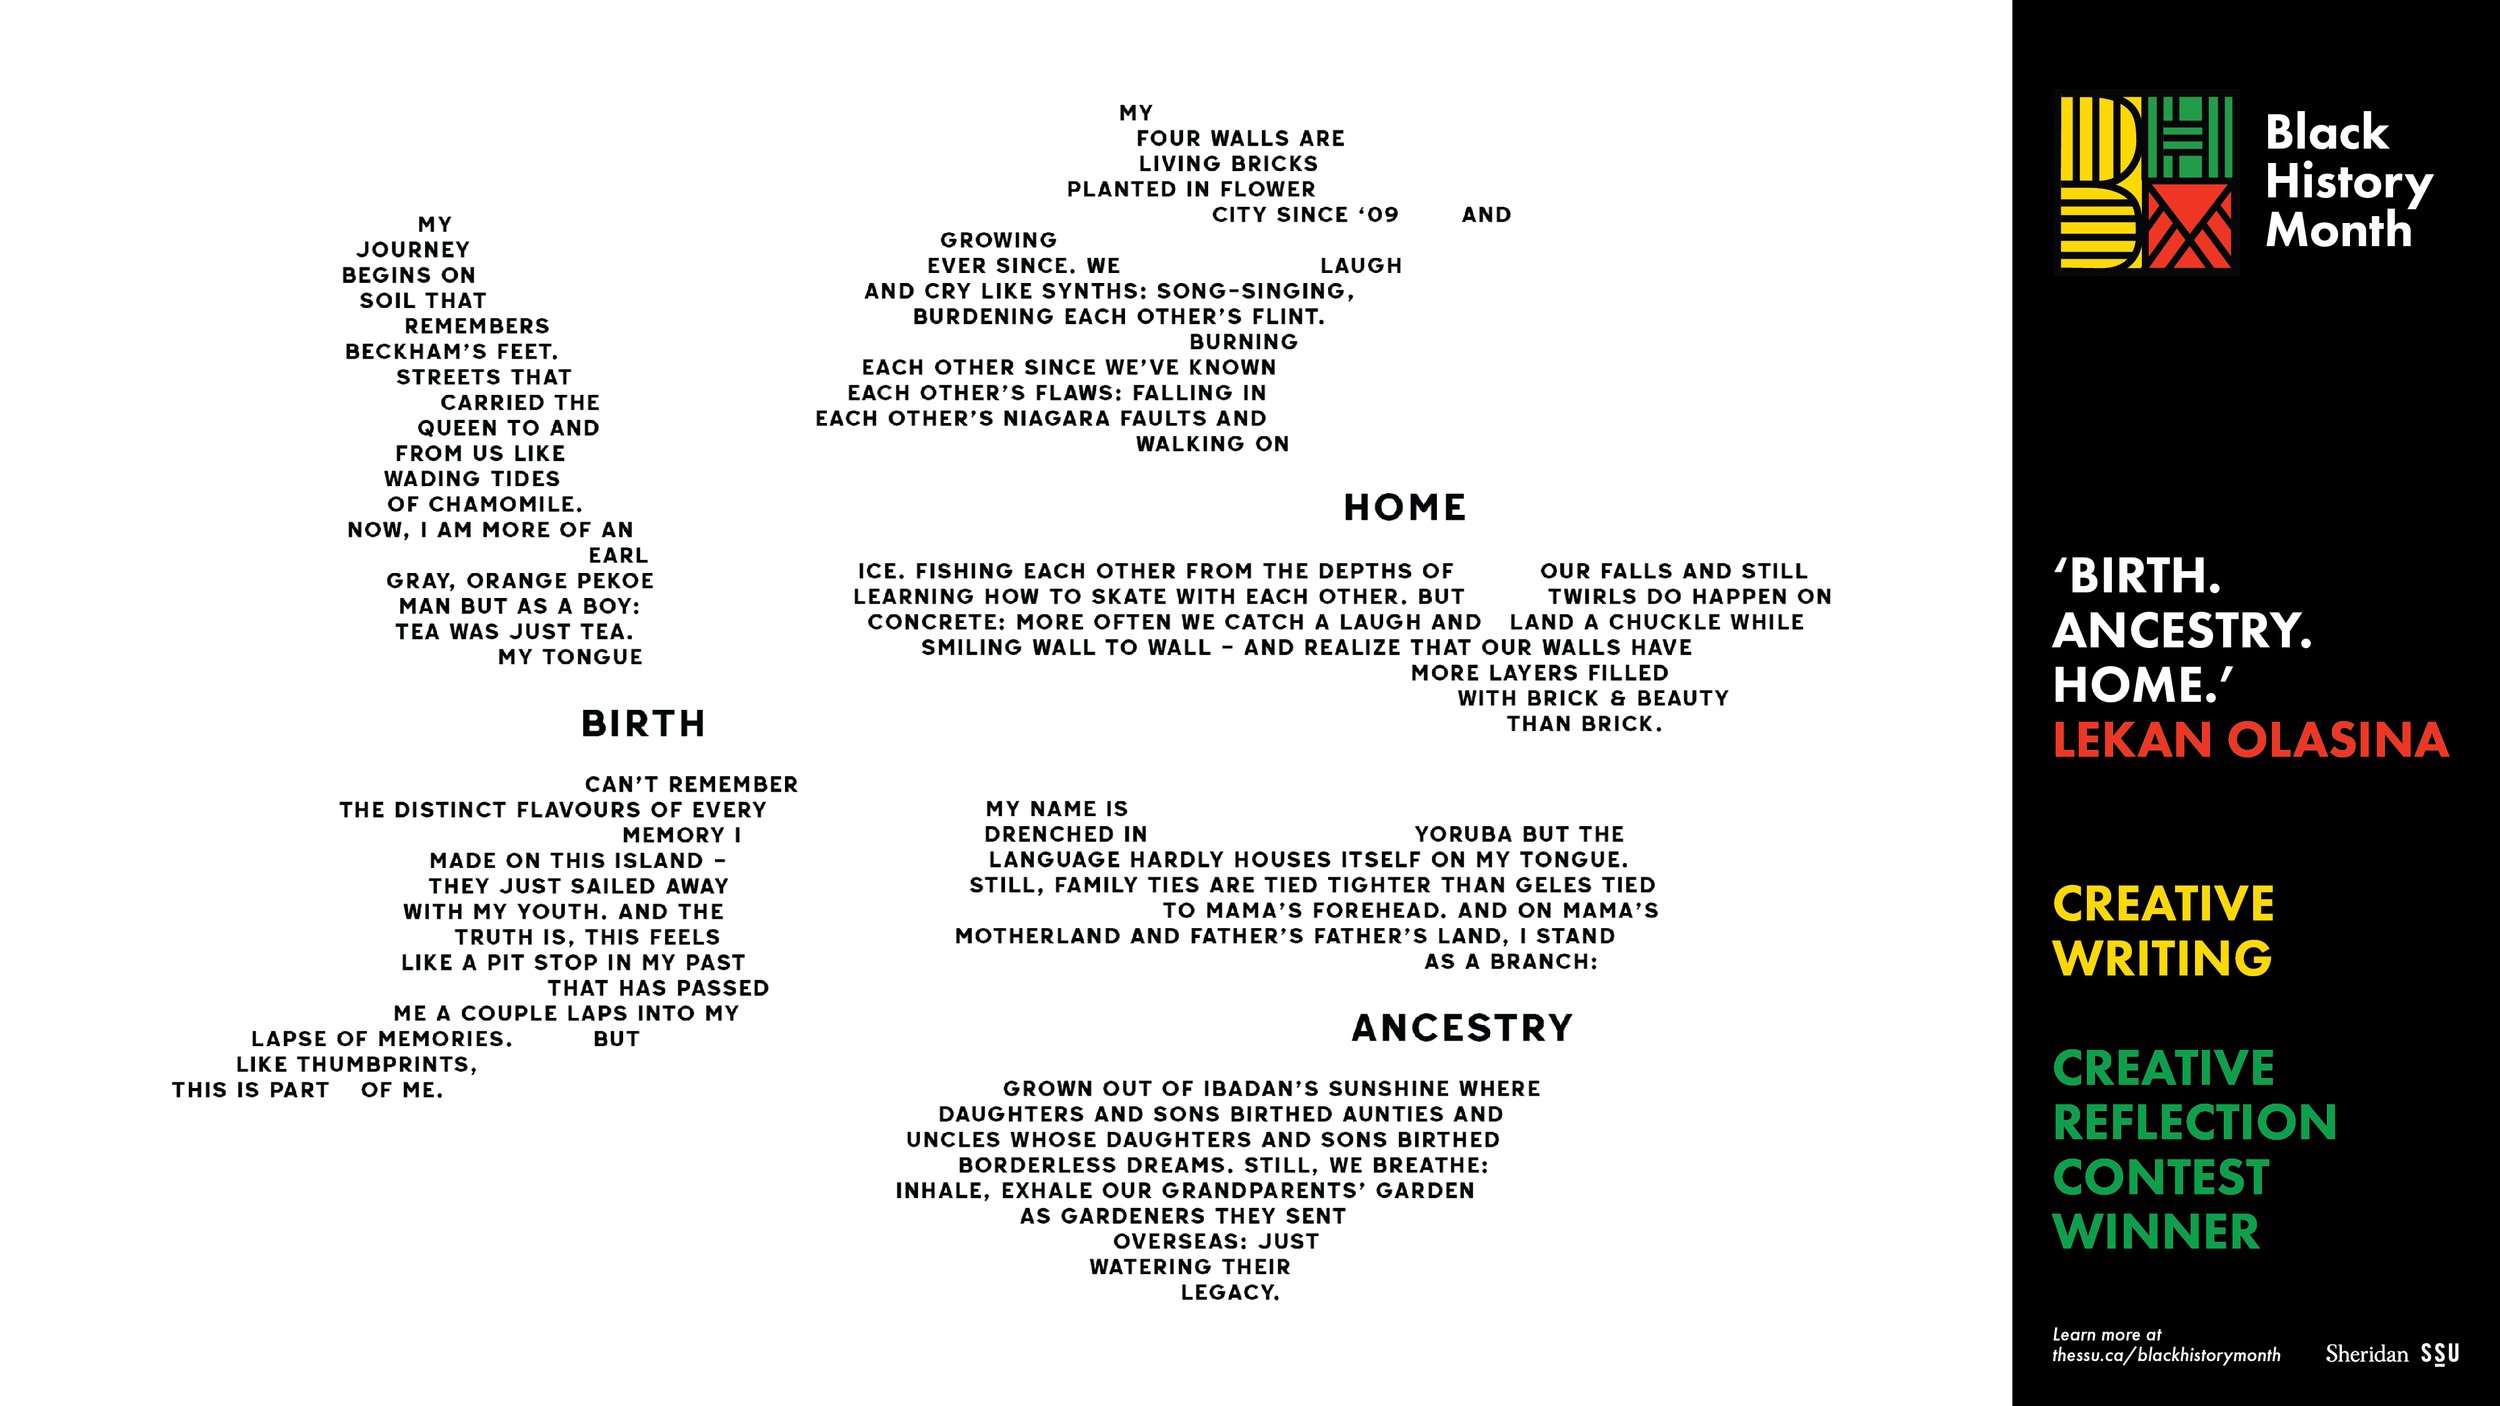 Birth. Ancestry. Home.